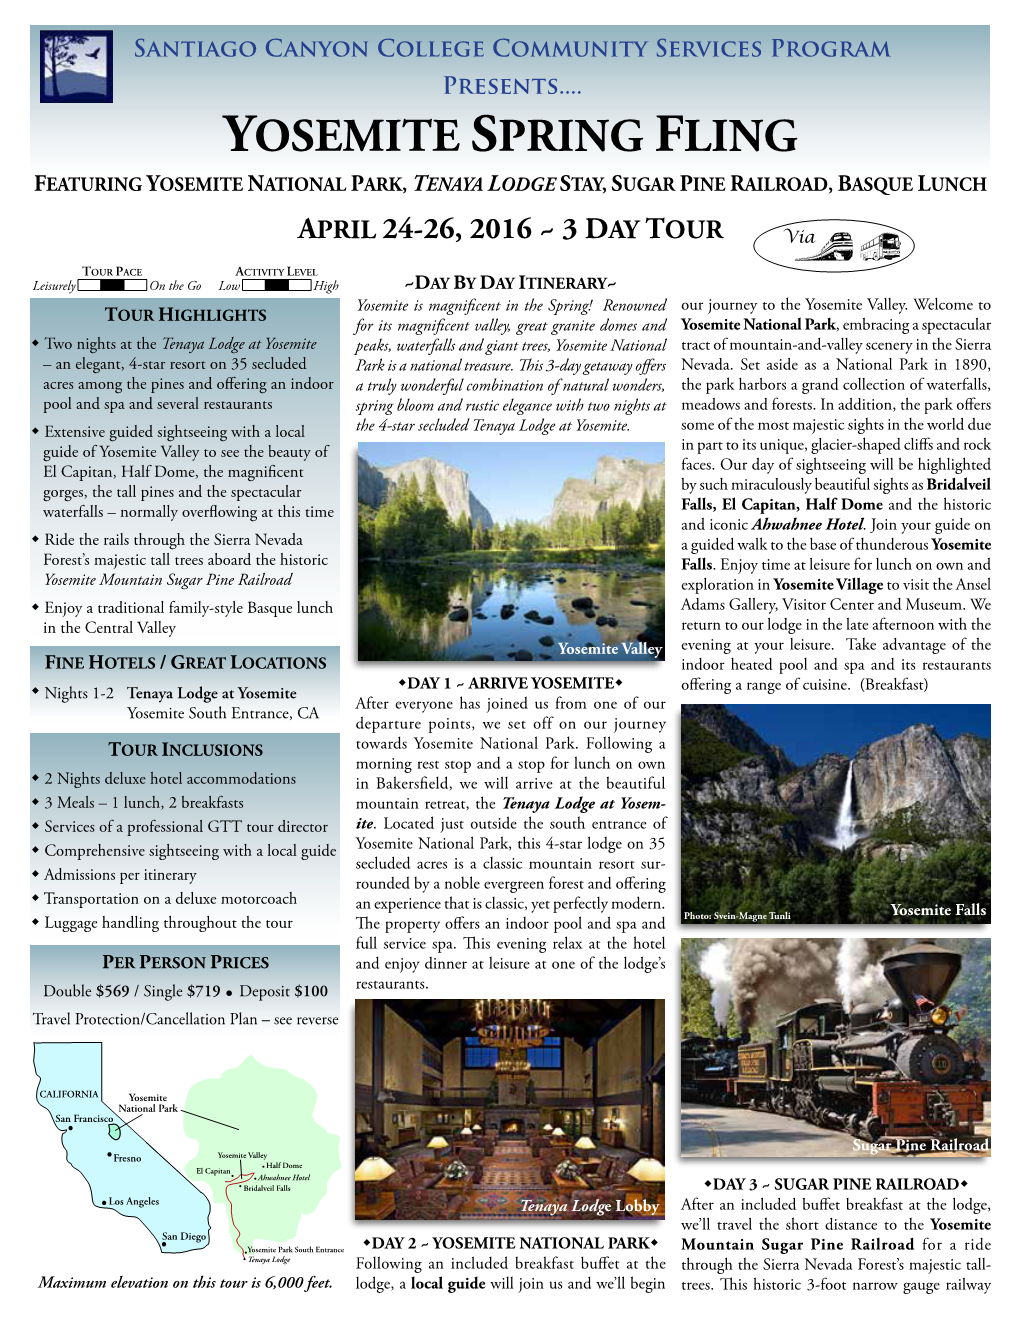 Yosemite Spring Fling Featuring Yosemite National Park, Tenaya Lodge Stay, Sugar Pine Railroad, Basque Lunch